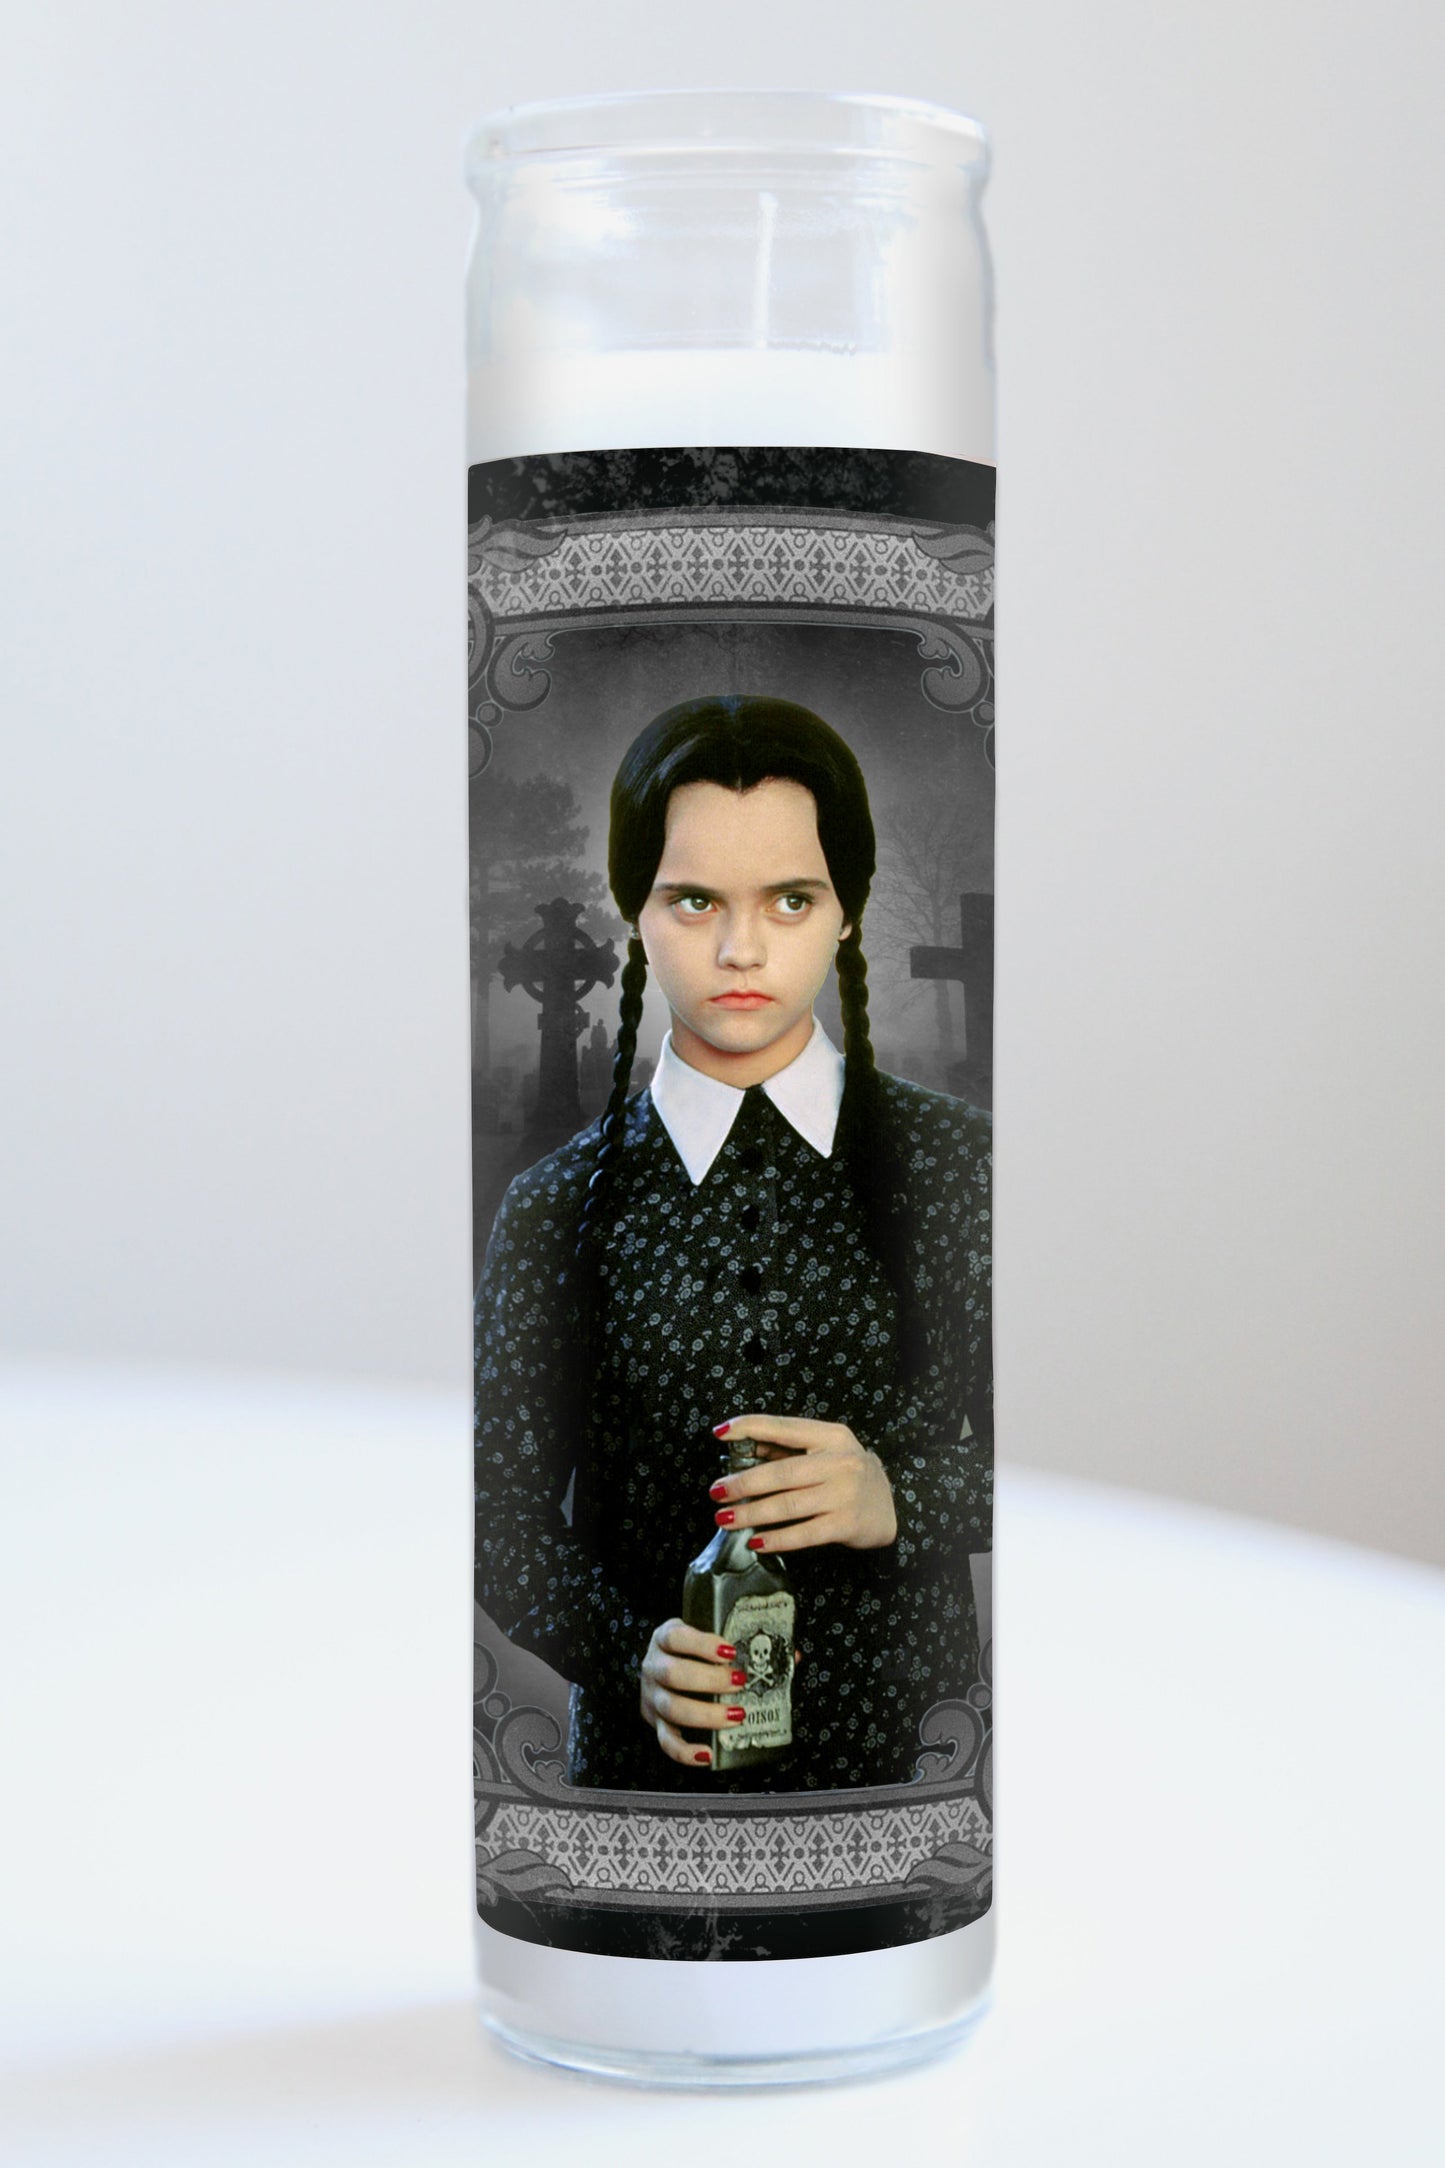 Wednesday Addams (Addams Family) Black Framed Candle